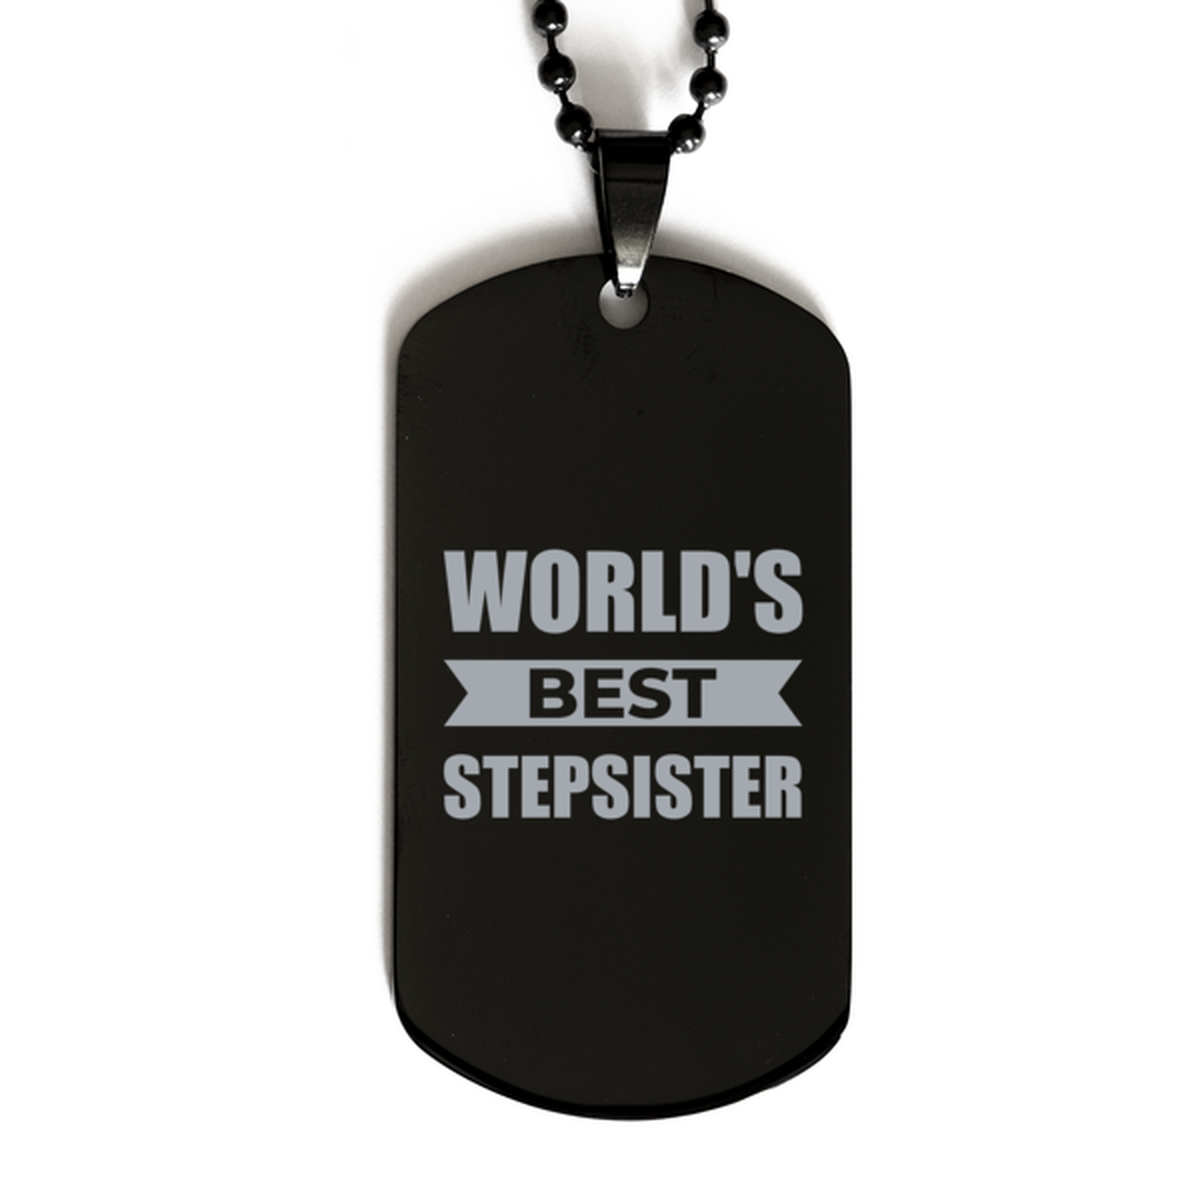 Worlds Best Stepsister Gifts, Funny Black Engraved Dog Tag For Stepsister, Birthday Presents For Women